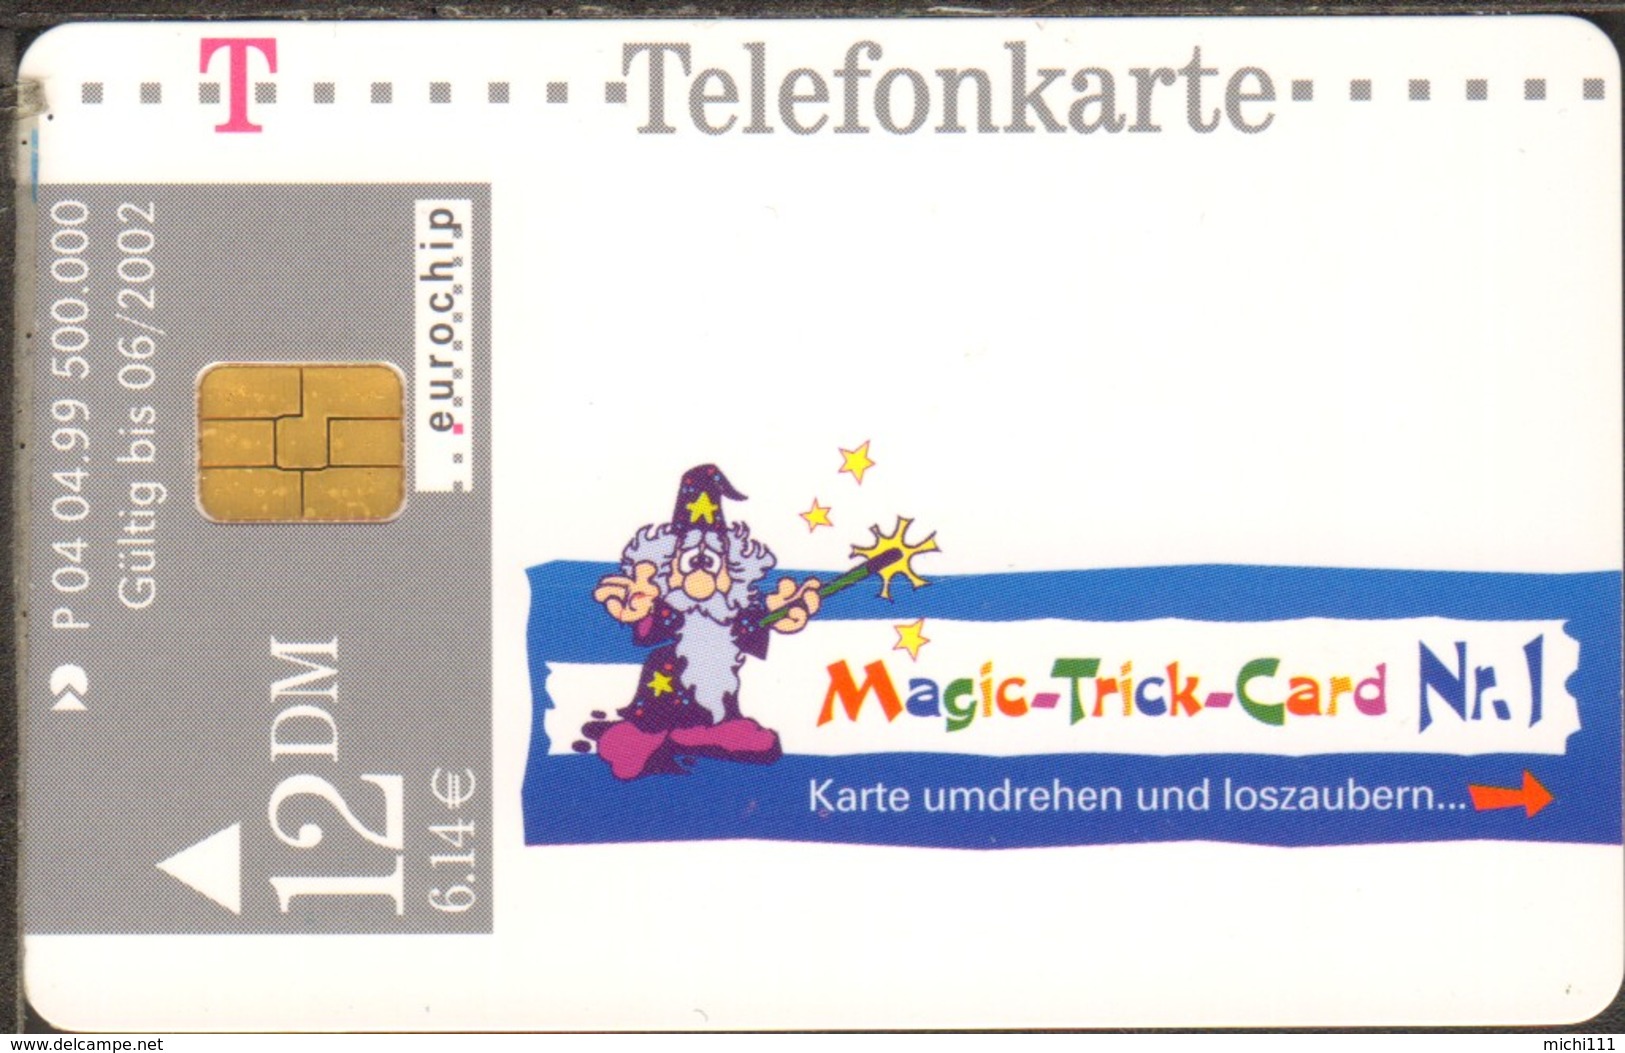 Phonecard Telefonkarte  Magic-Trick-Card Nr.1 P 04 04.99 12 DM/6,14€ Used - R-Series : Regionali